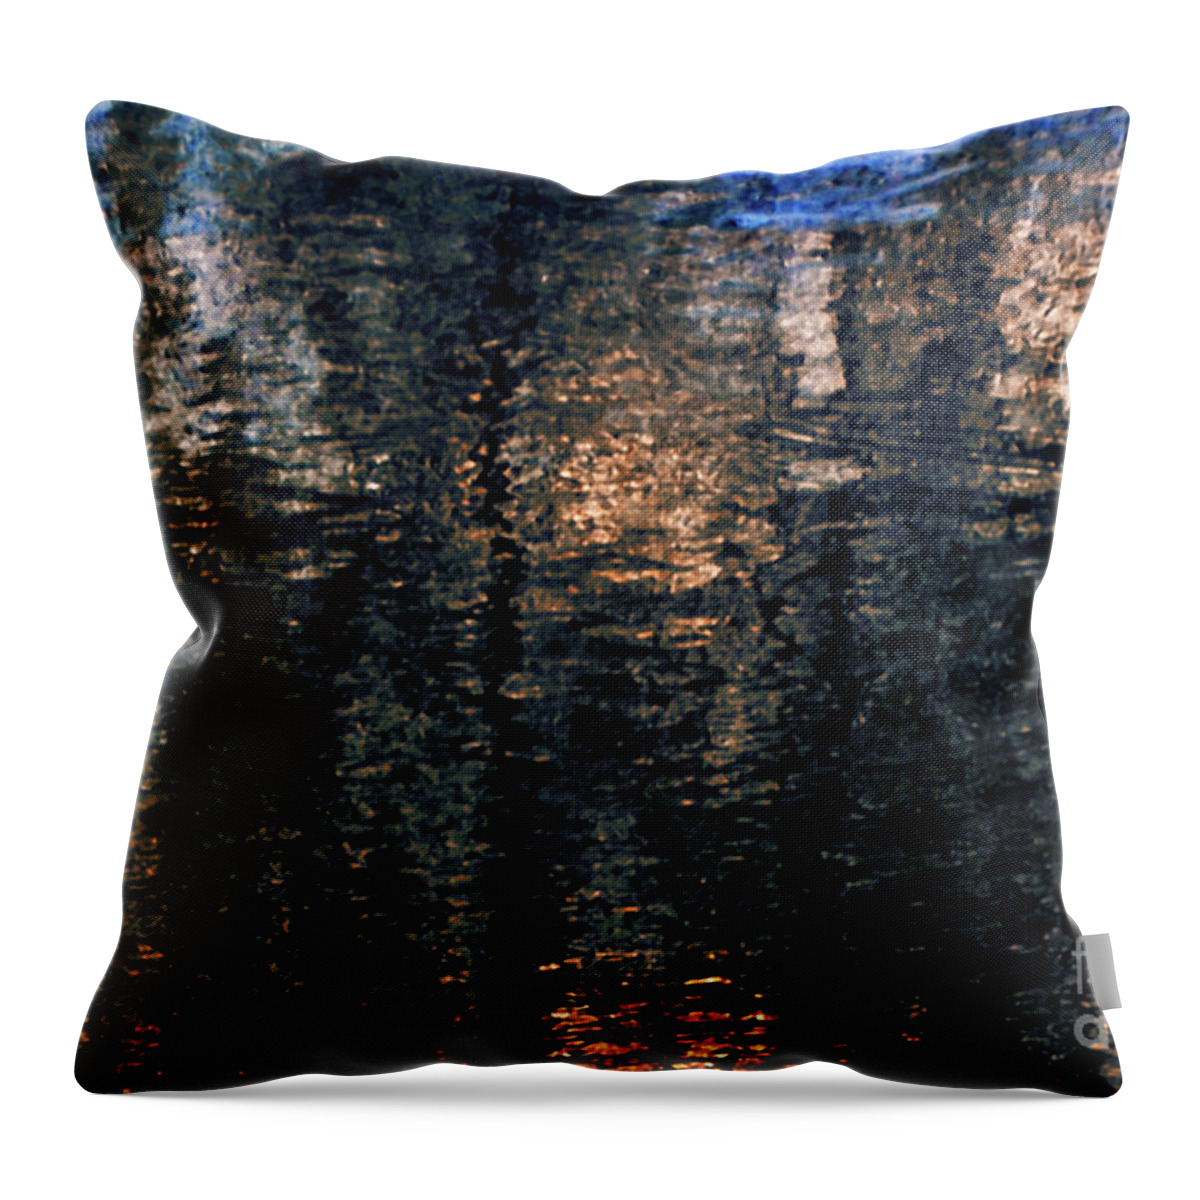 Digital_art Throw Pillow featuring the digital art Abstract 1050 by Gerlinde Keating - Galleria GK Keating Associates Inc